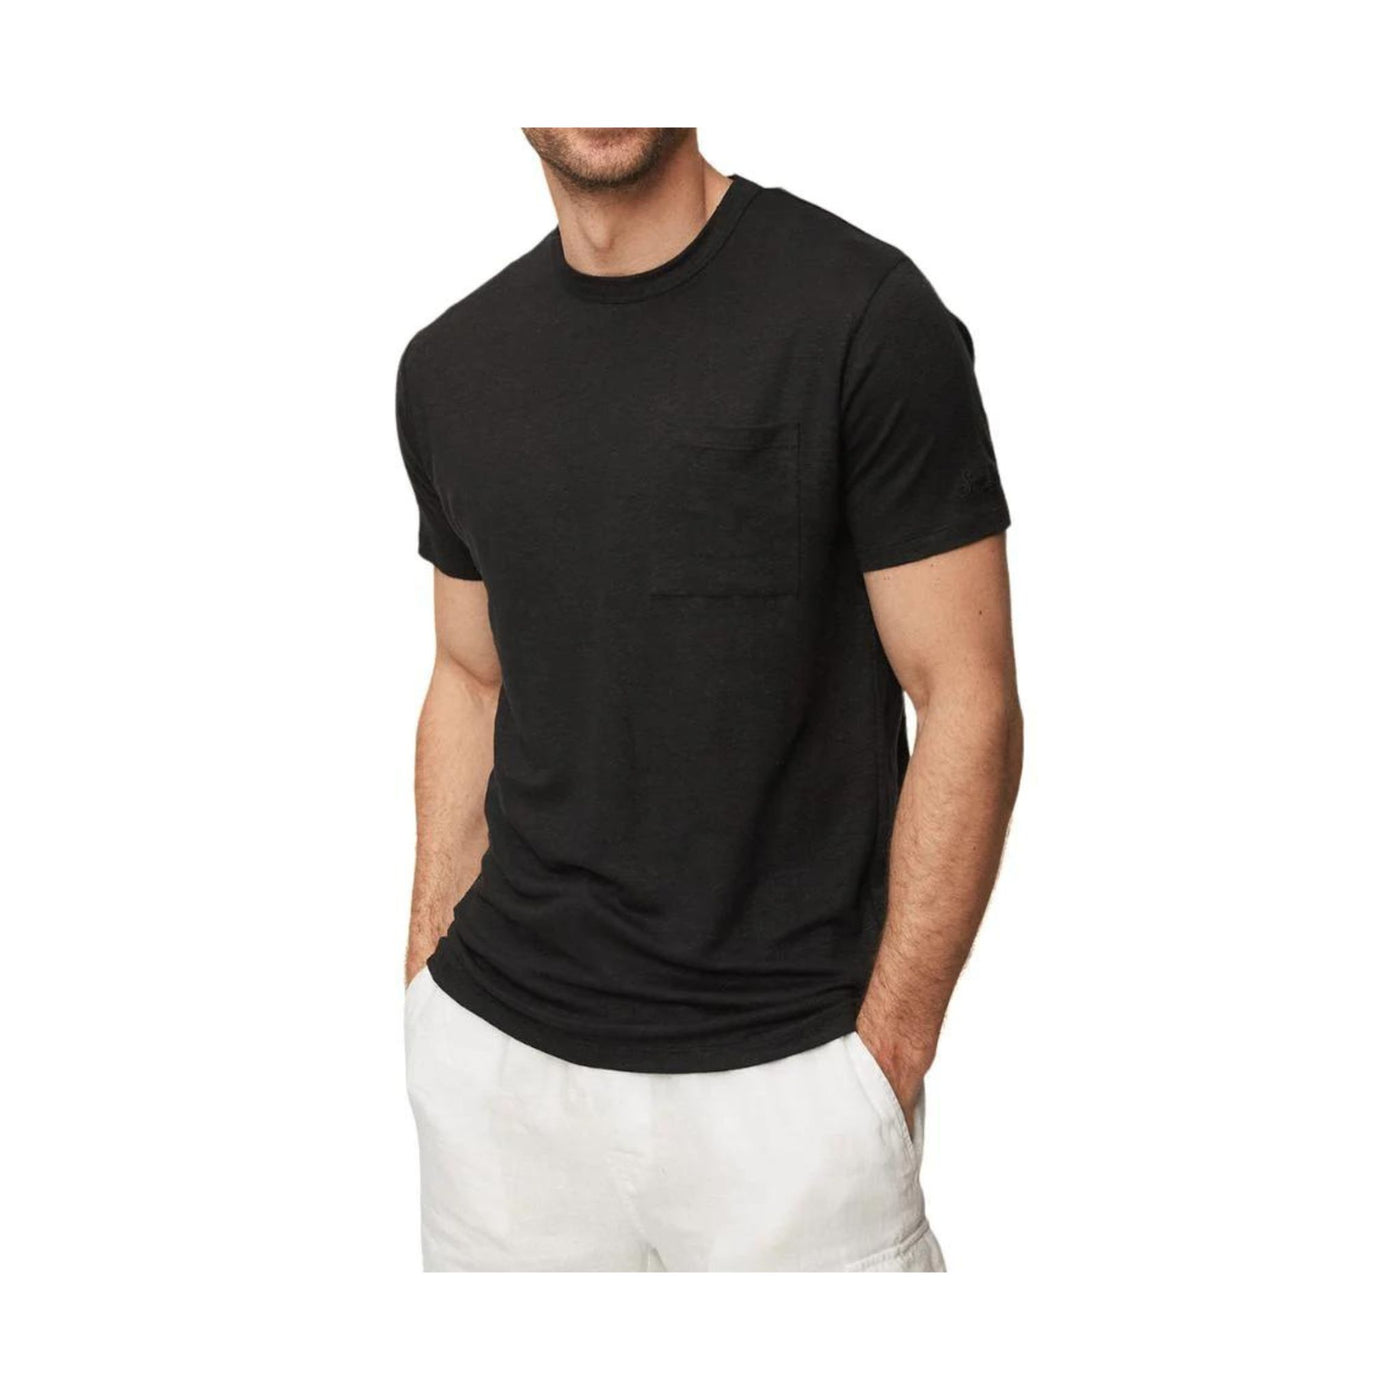 Men's crew neck T-shirt with pocket